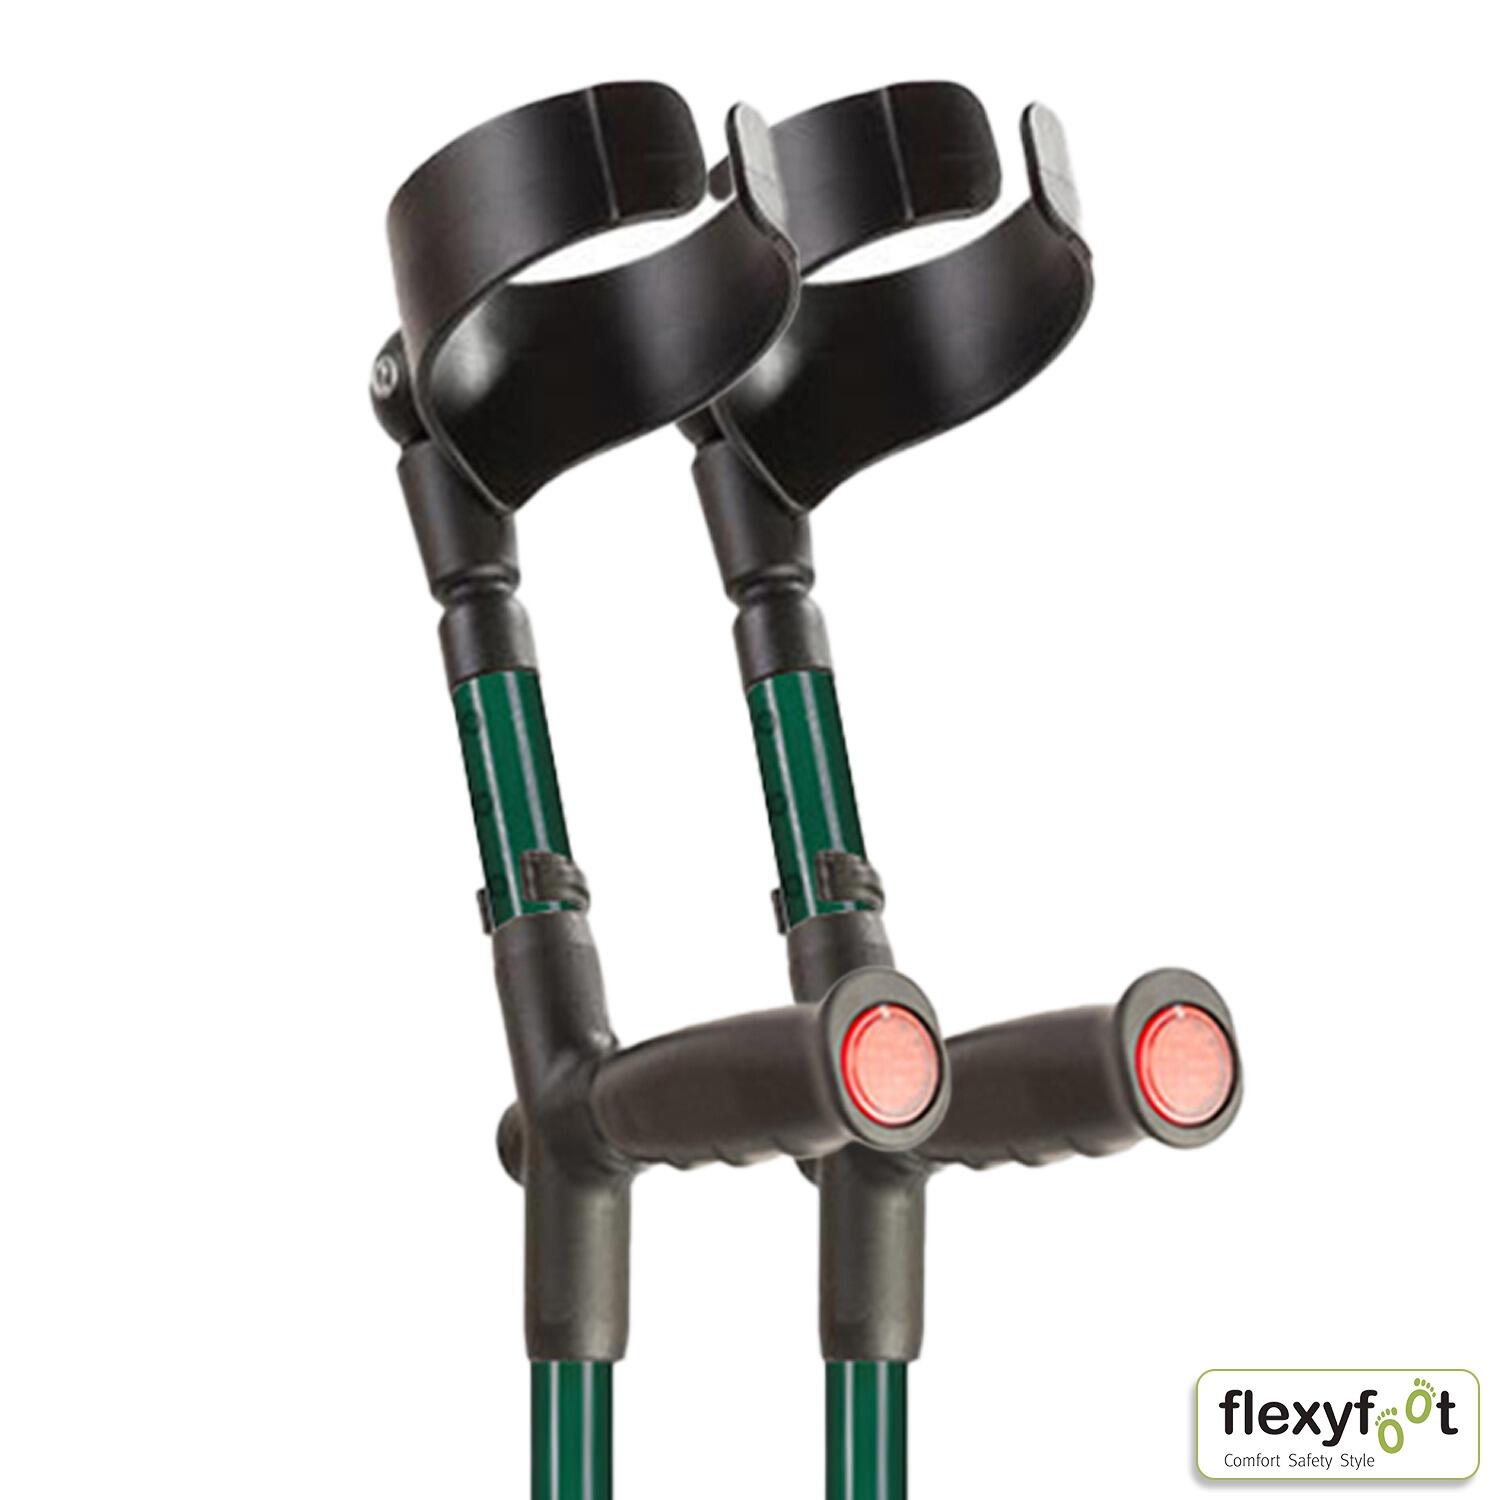 Flexyfoot Soft Grip Shock Absorbing Crutches - British Racing Green - Closed Cuff